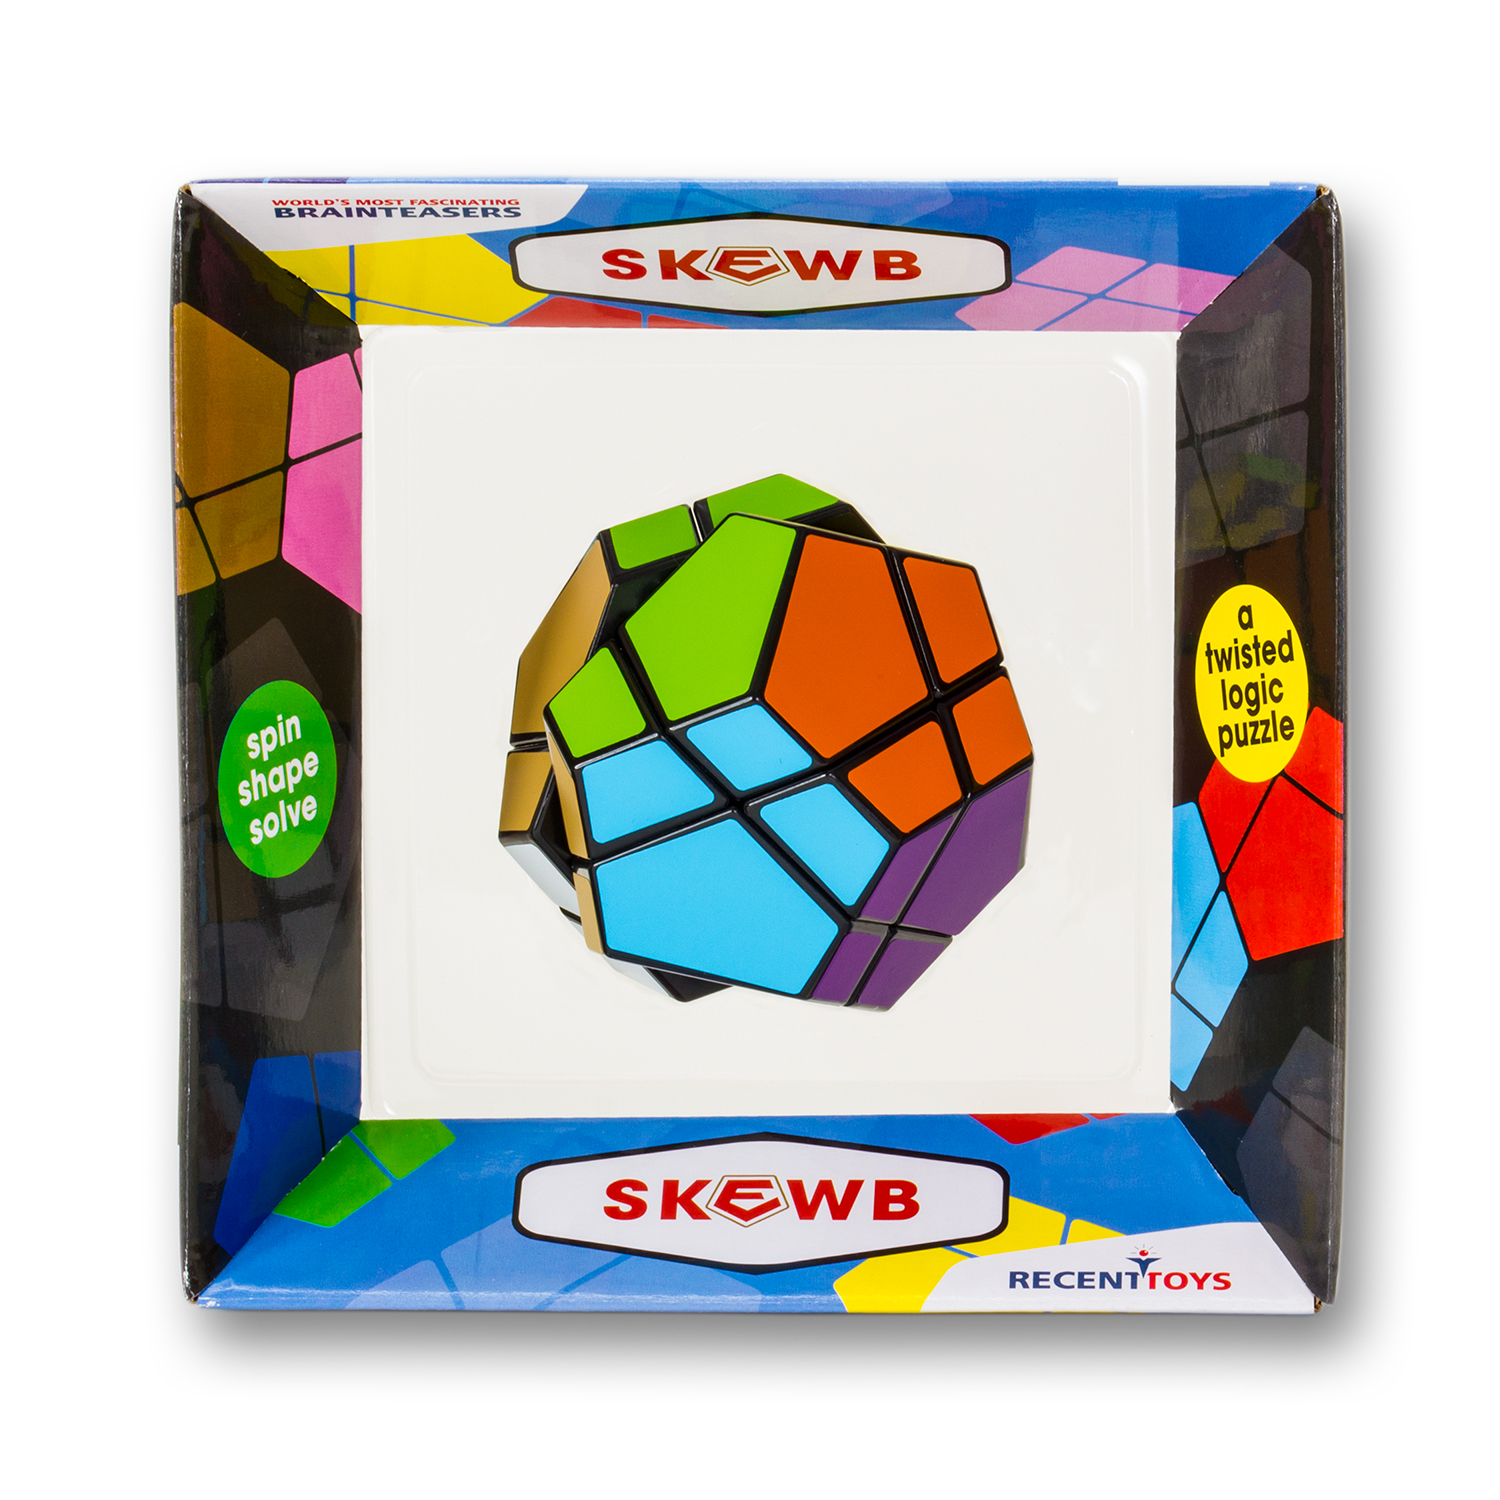 Recent Toys Meffert's Puzzles - Skewb